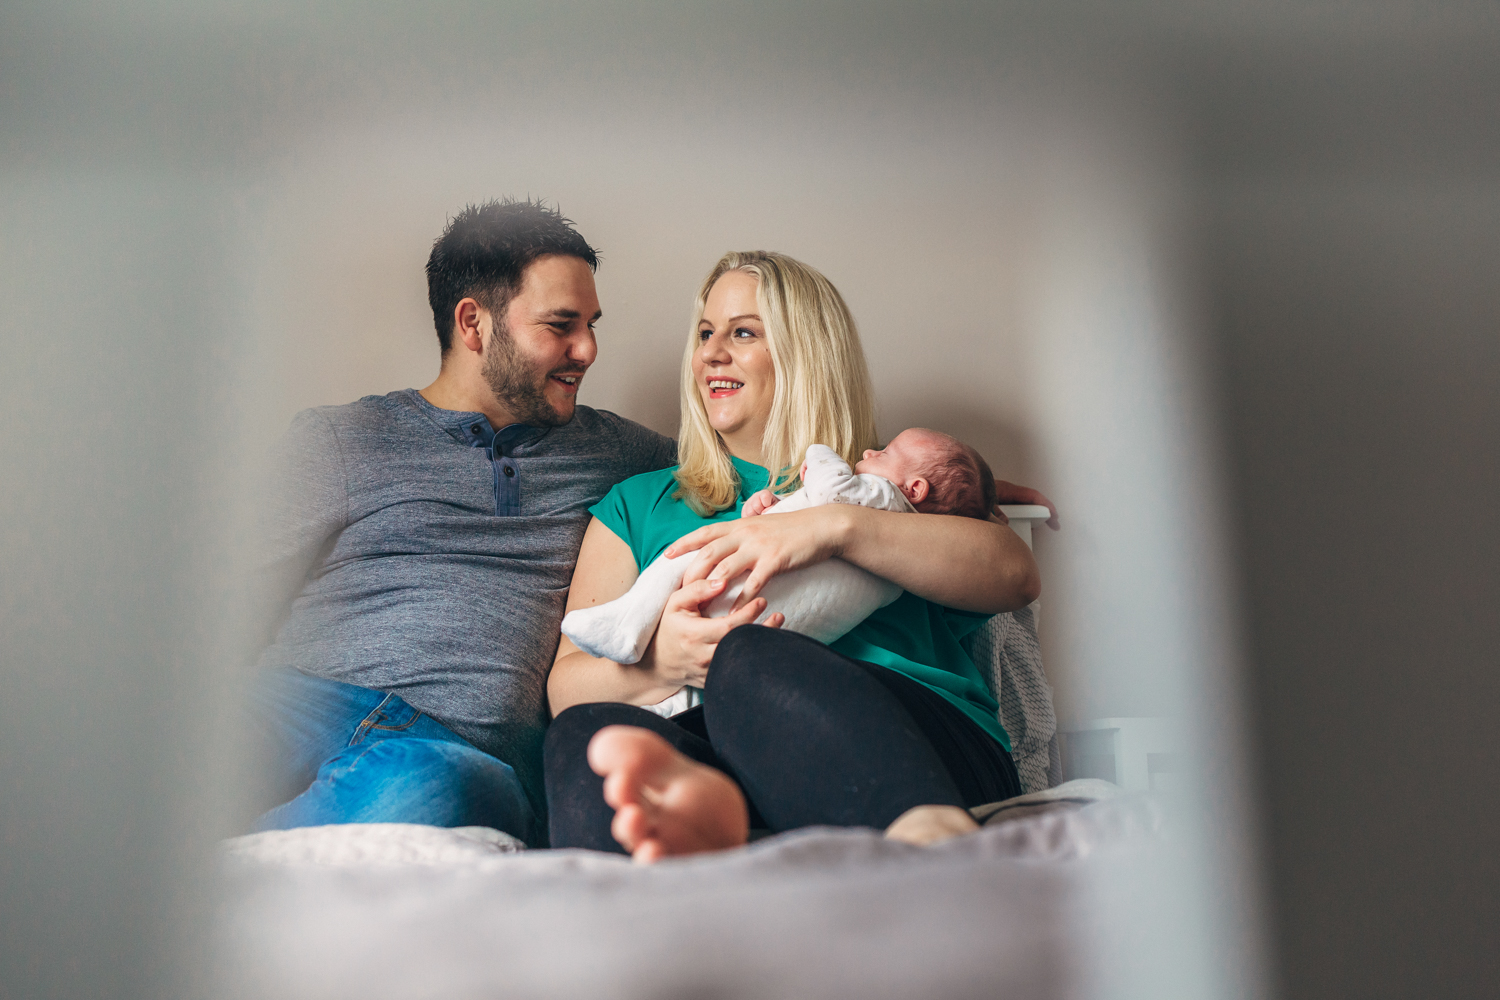 Cirencester Family Photography | Newborn Photography-4.JPG